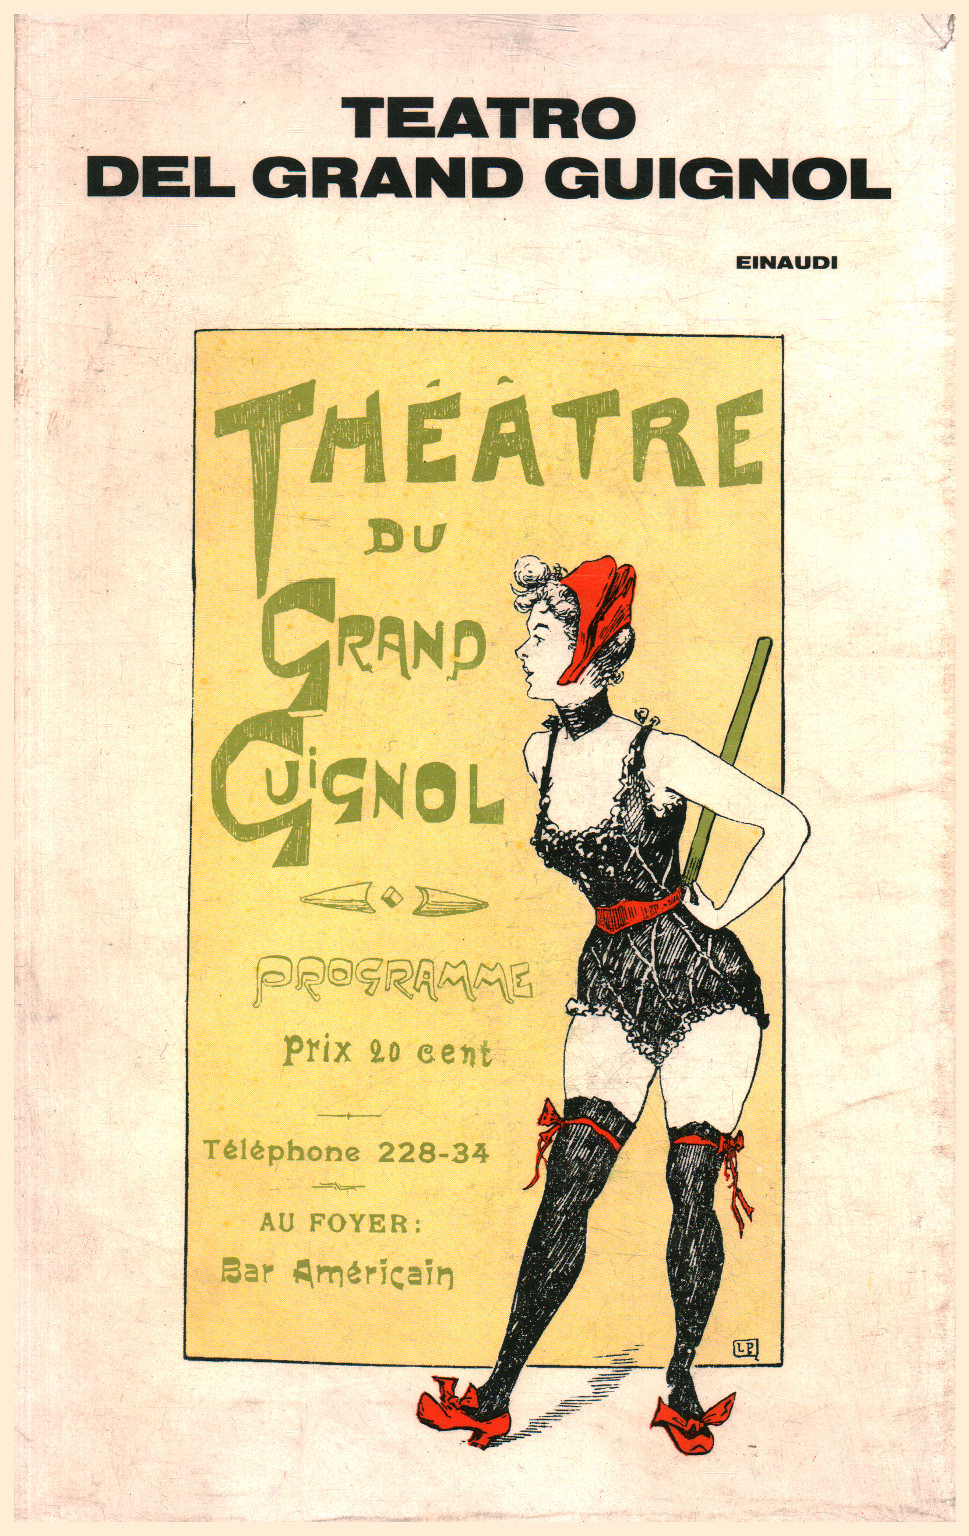 Theater of the Grand Guignol